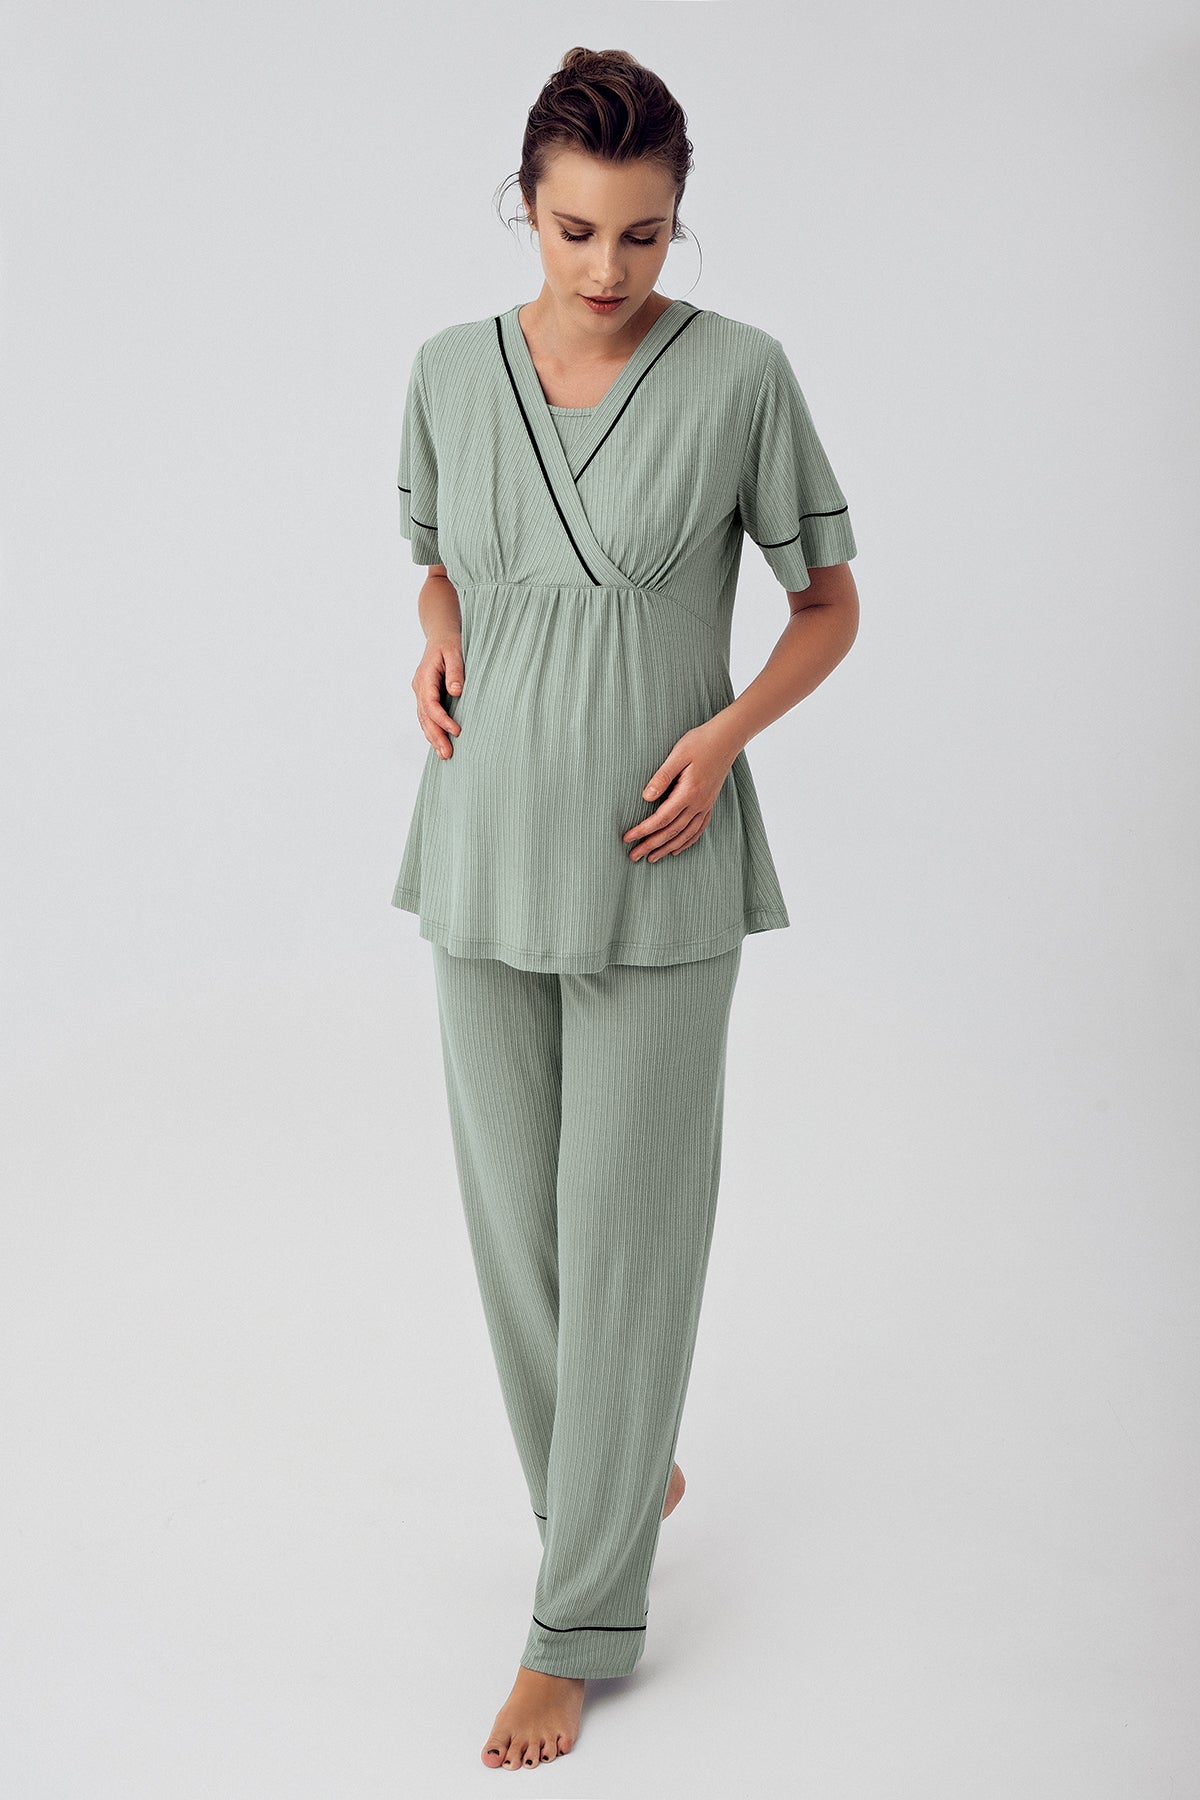 Shopymommy 16202 Double Breasted Maternity & Nursing Pajamas Green